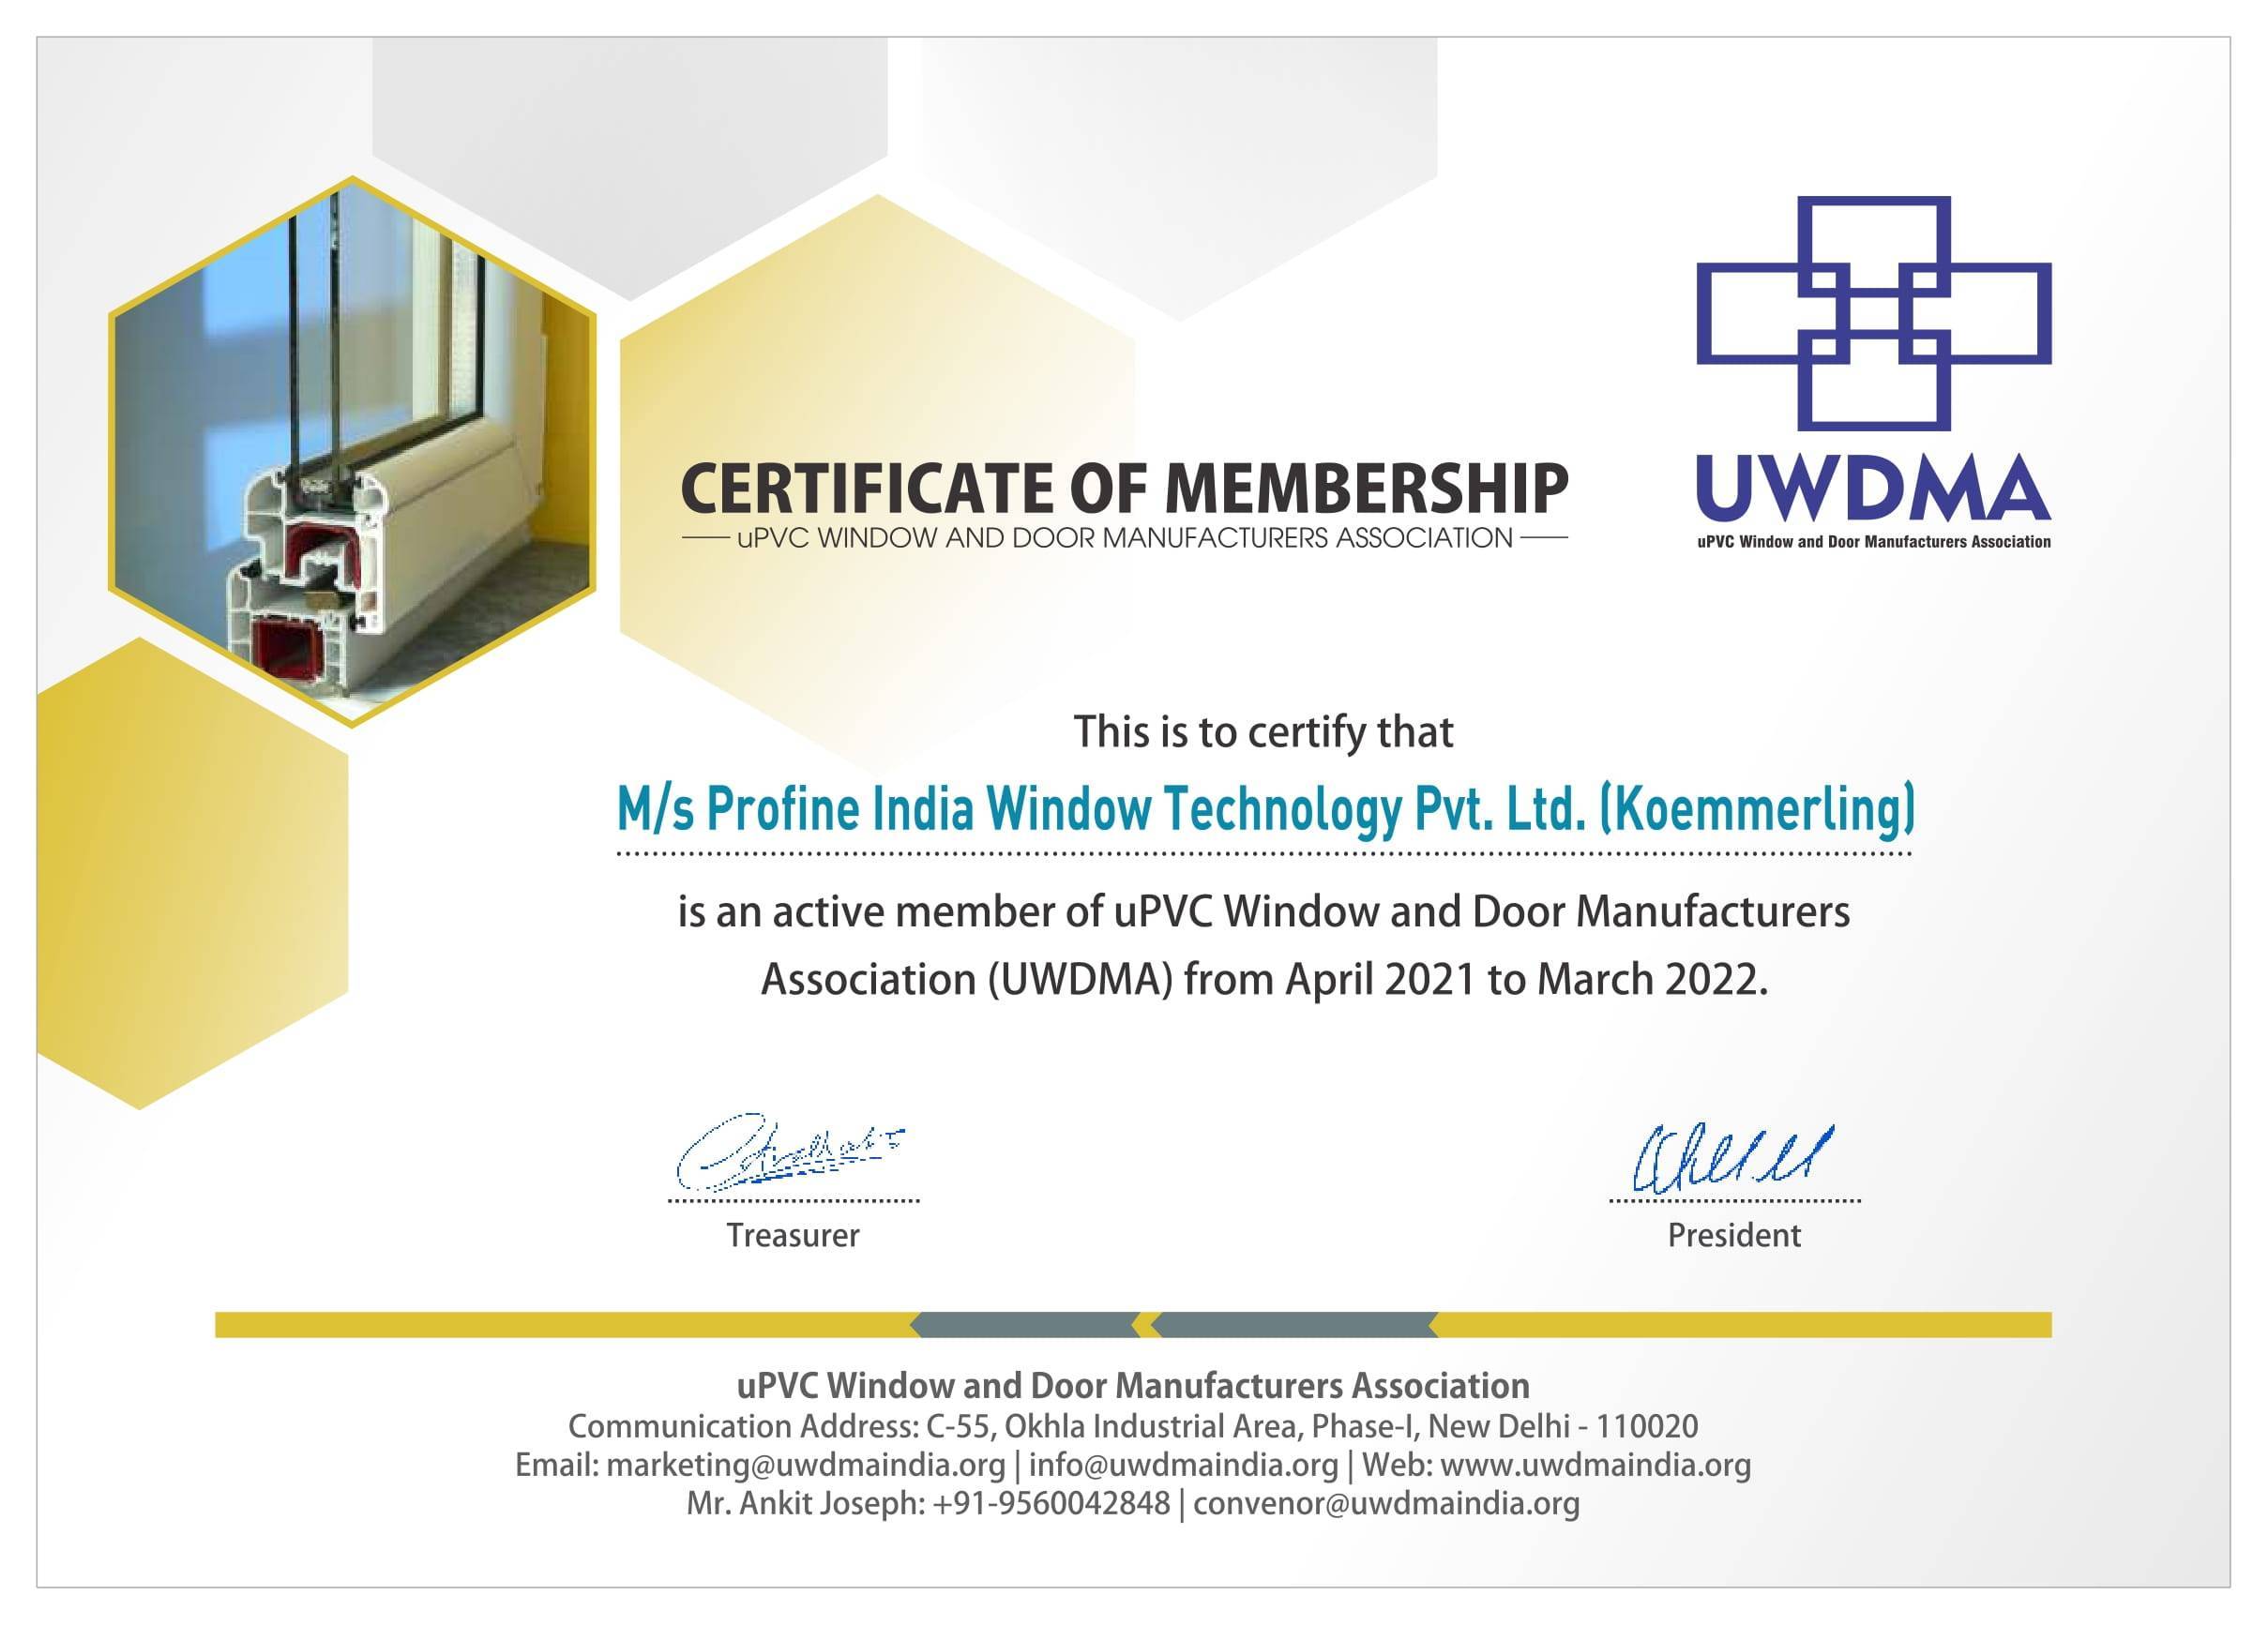 UWDMA Certificate of Membership